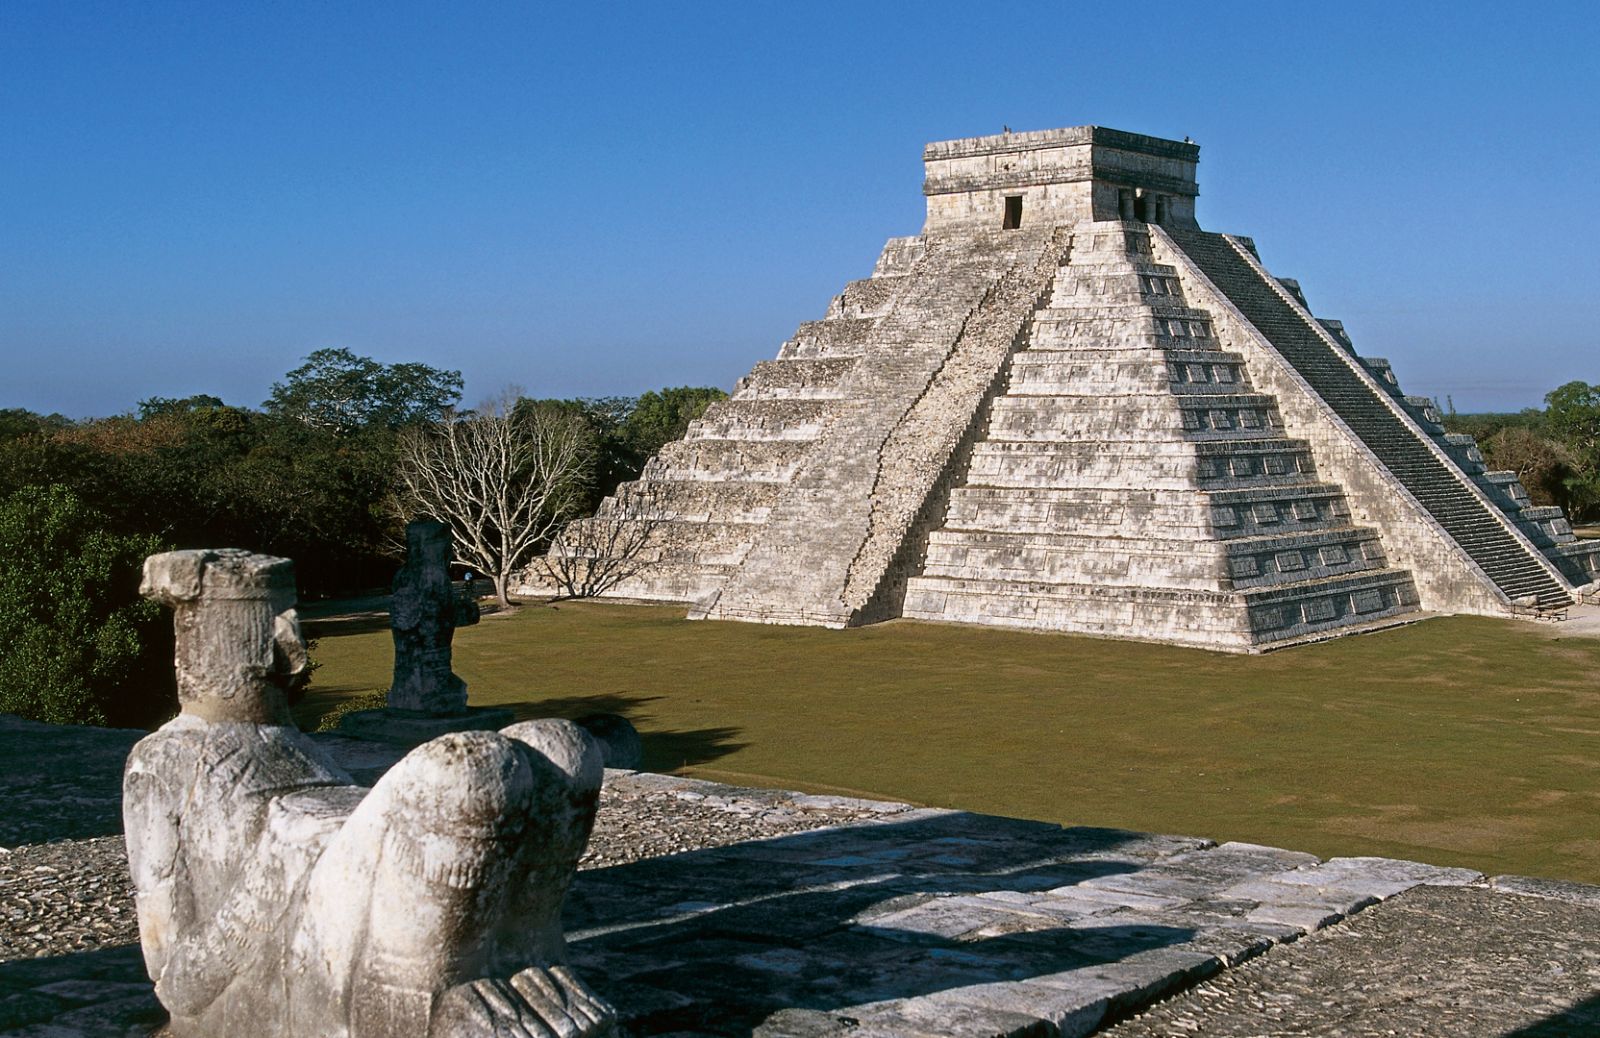 A Chichén Itzá per l’equinozio di primavera